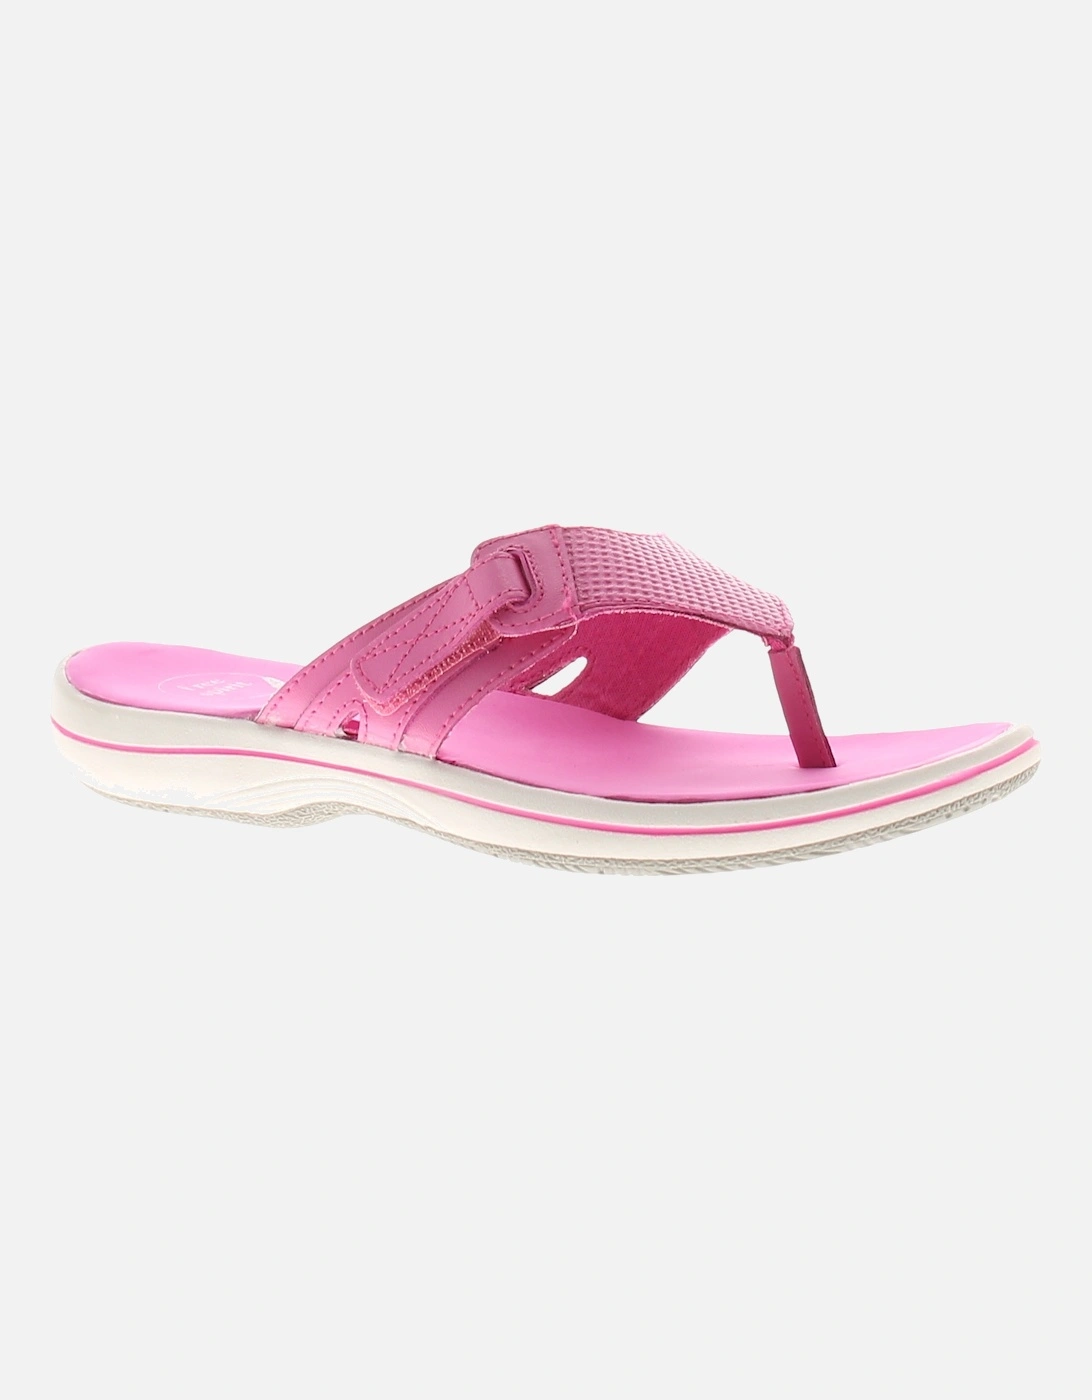 Free Spirit Womens Sandals Flip Flops Kelly Slip On pink UK Size, 6 of 5